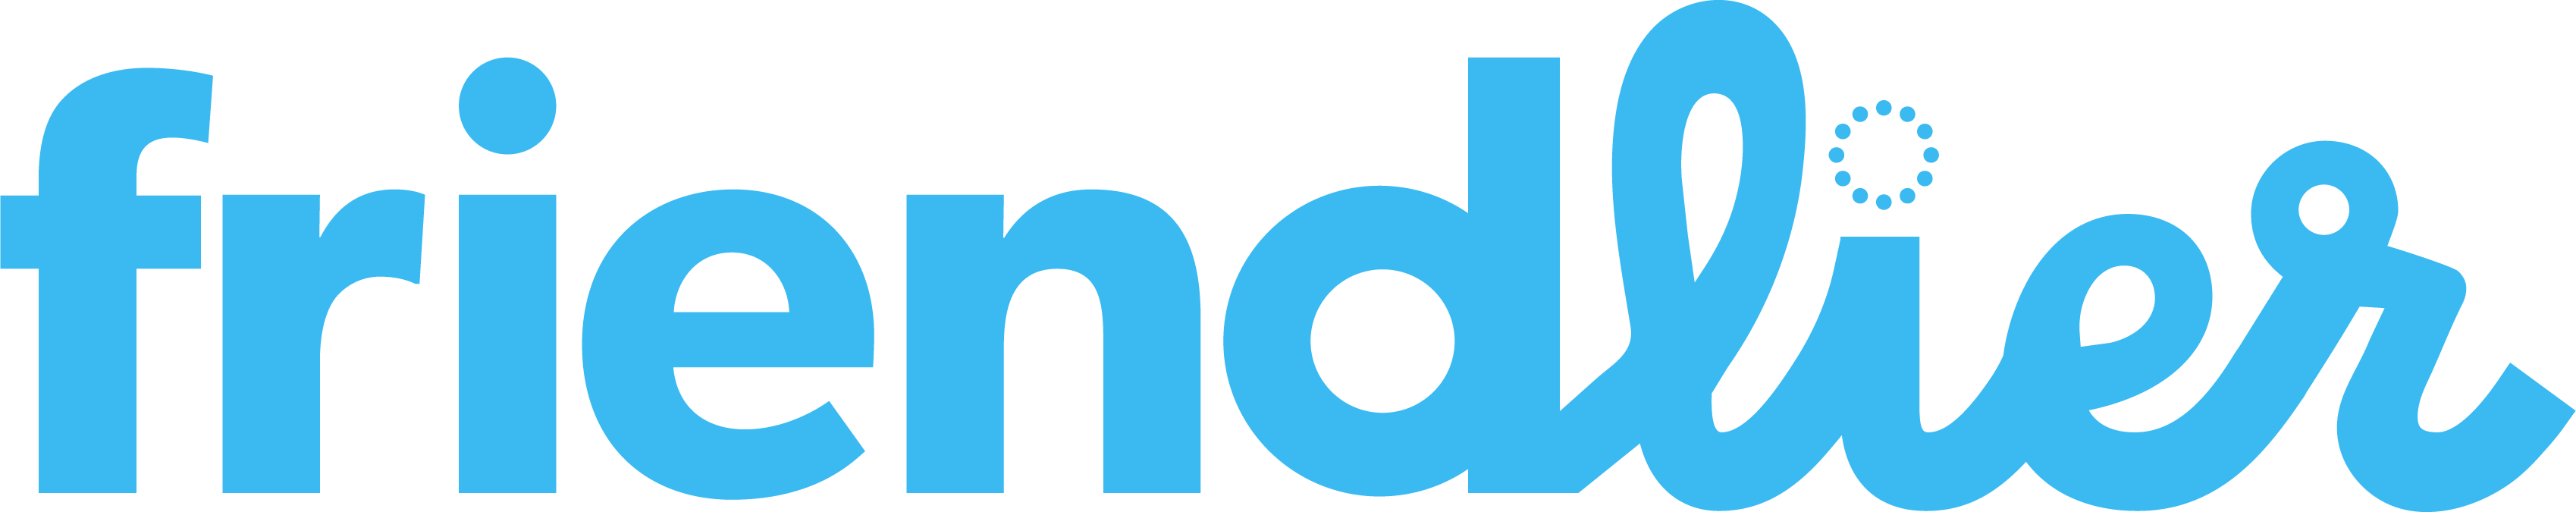 Friendlier logo